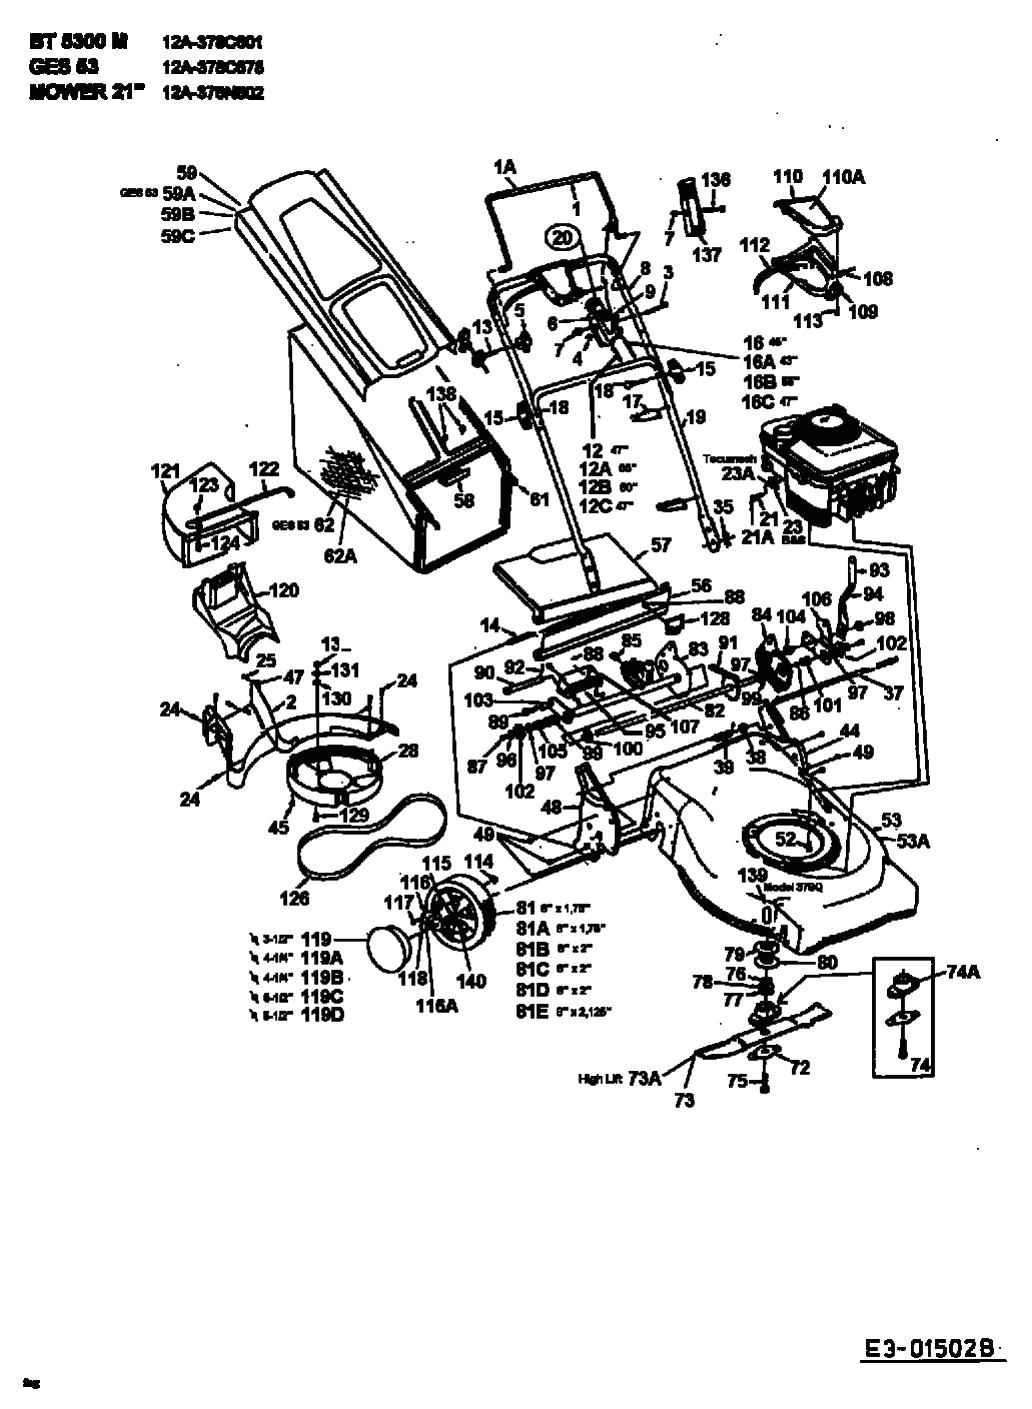 MTD Артикул 12A-378C678 (год выпуска 1998). Основная деталировка